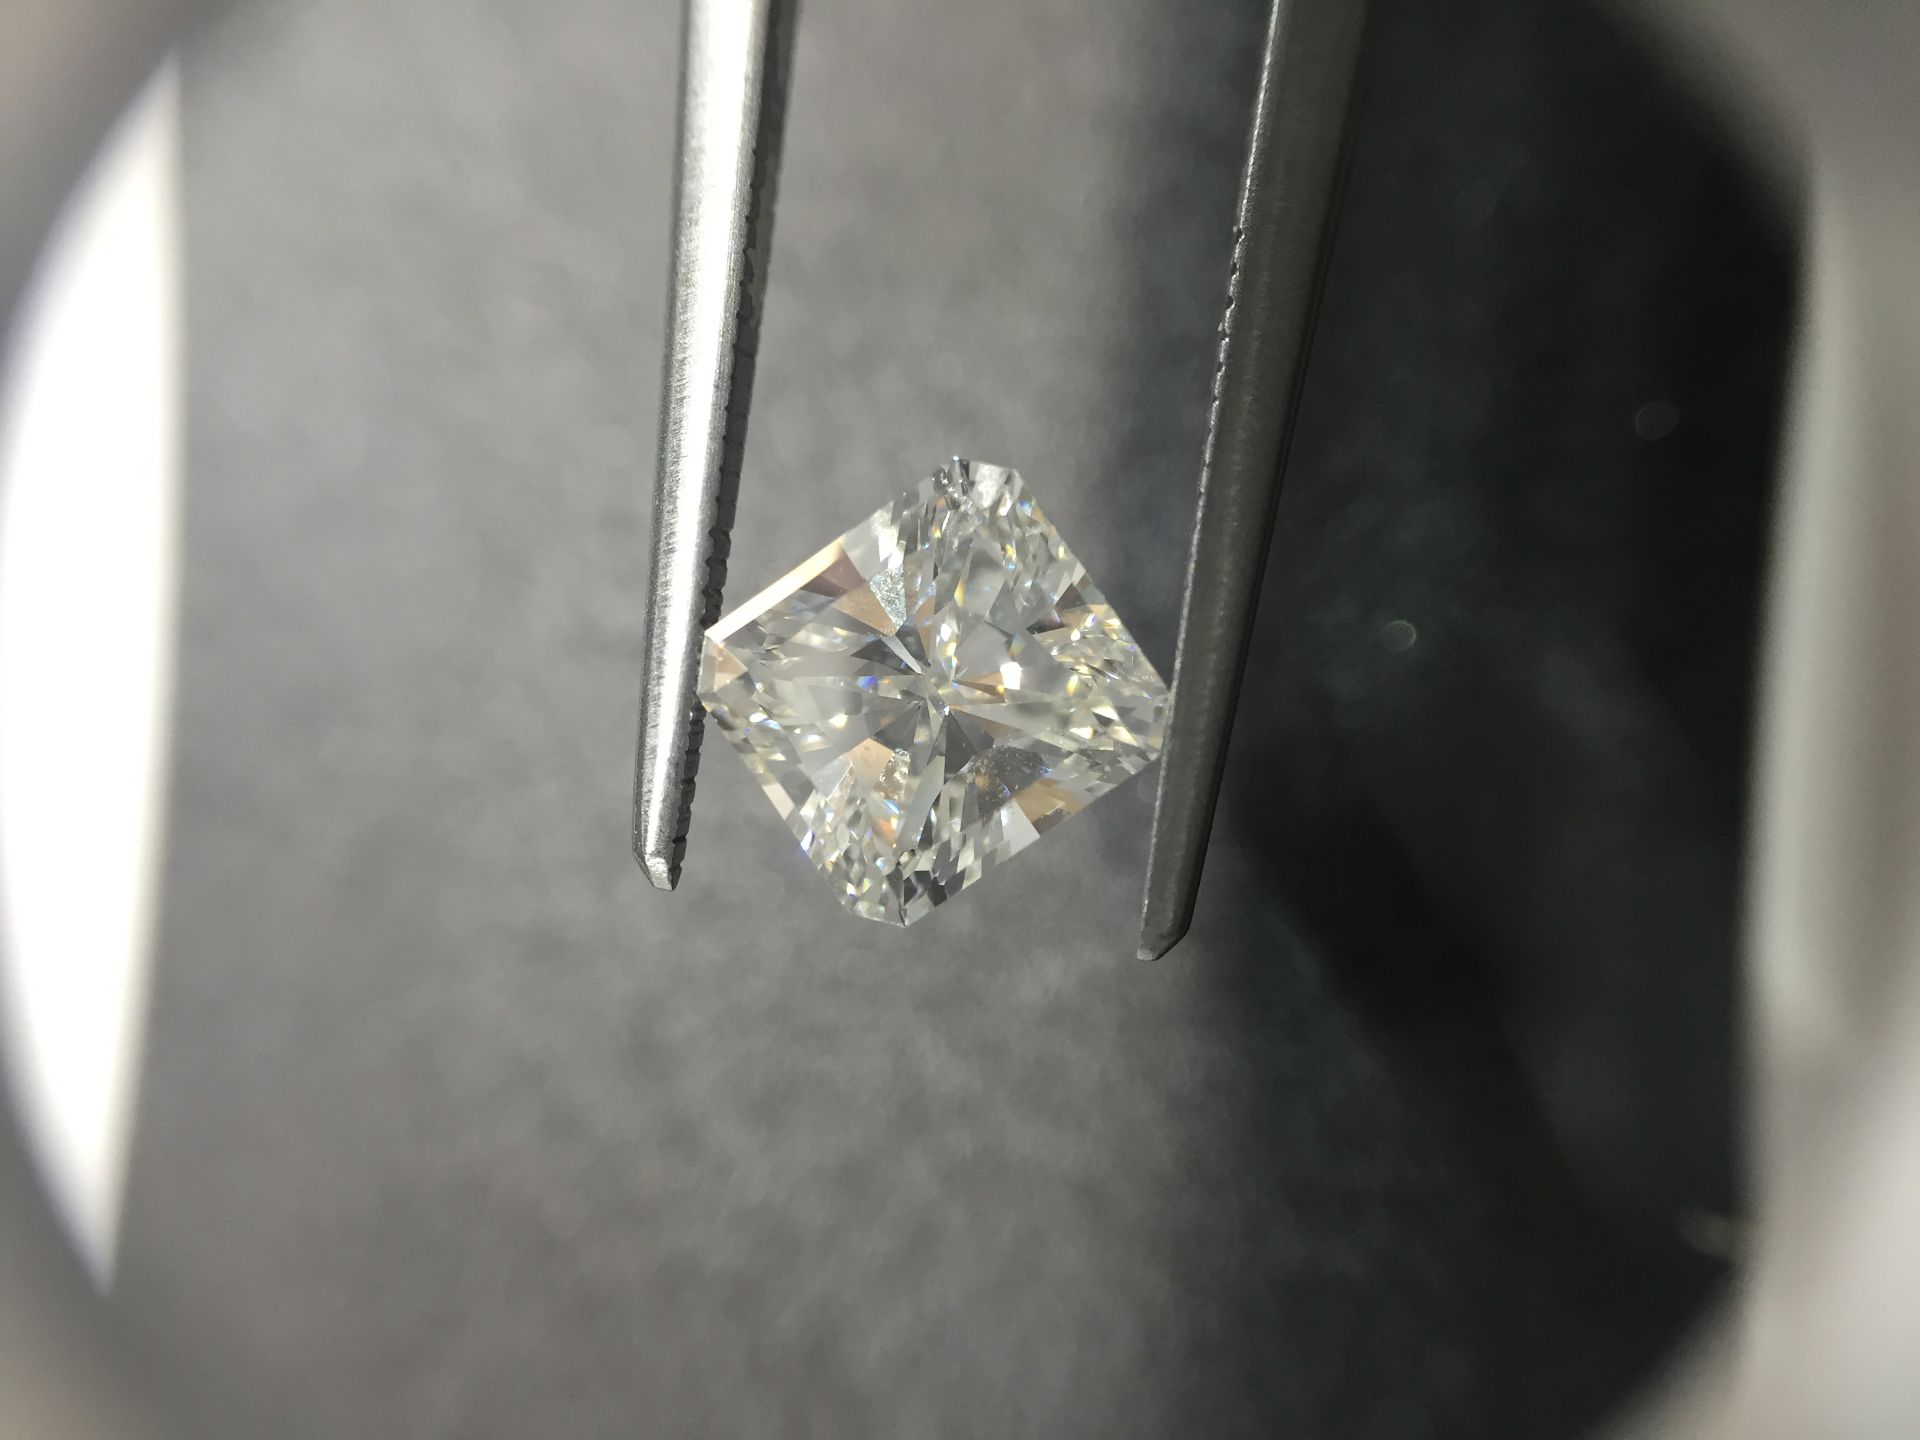 1.31ct radiant cut diamond. G colour, VS2 clarity. GIA certification - 1249472944. 6.61 x 6.08 x 4.